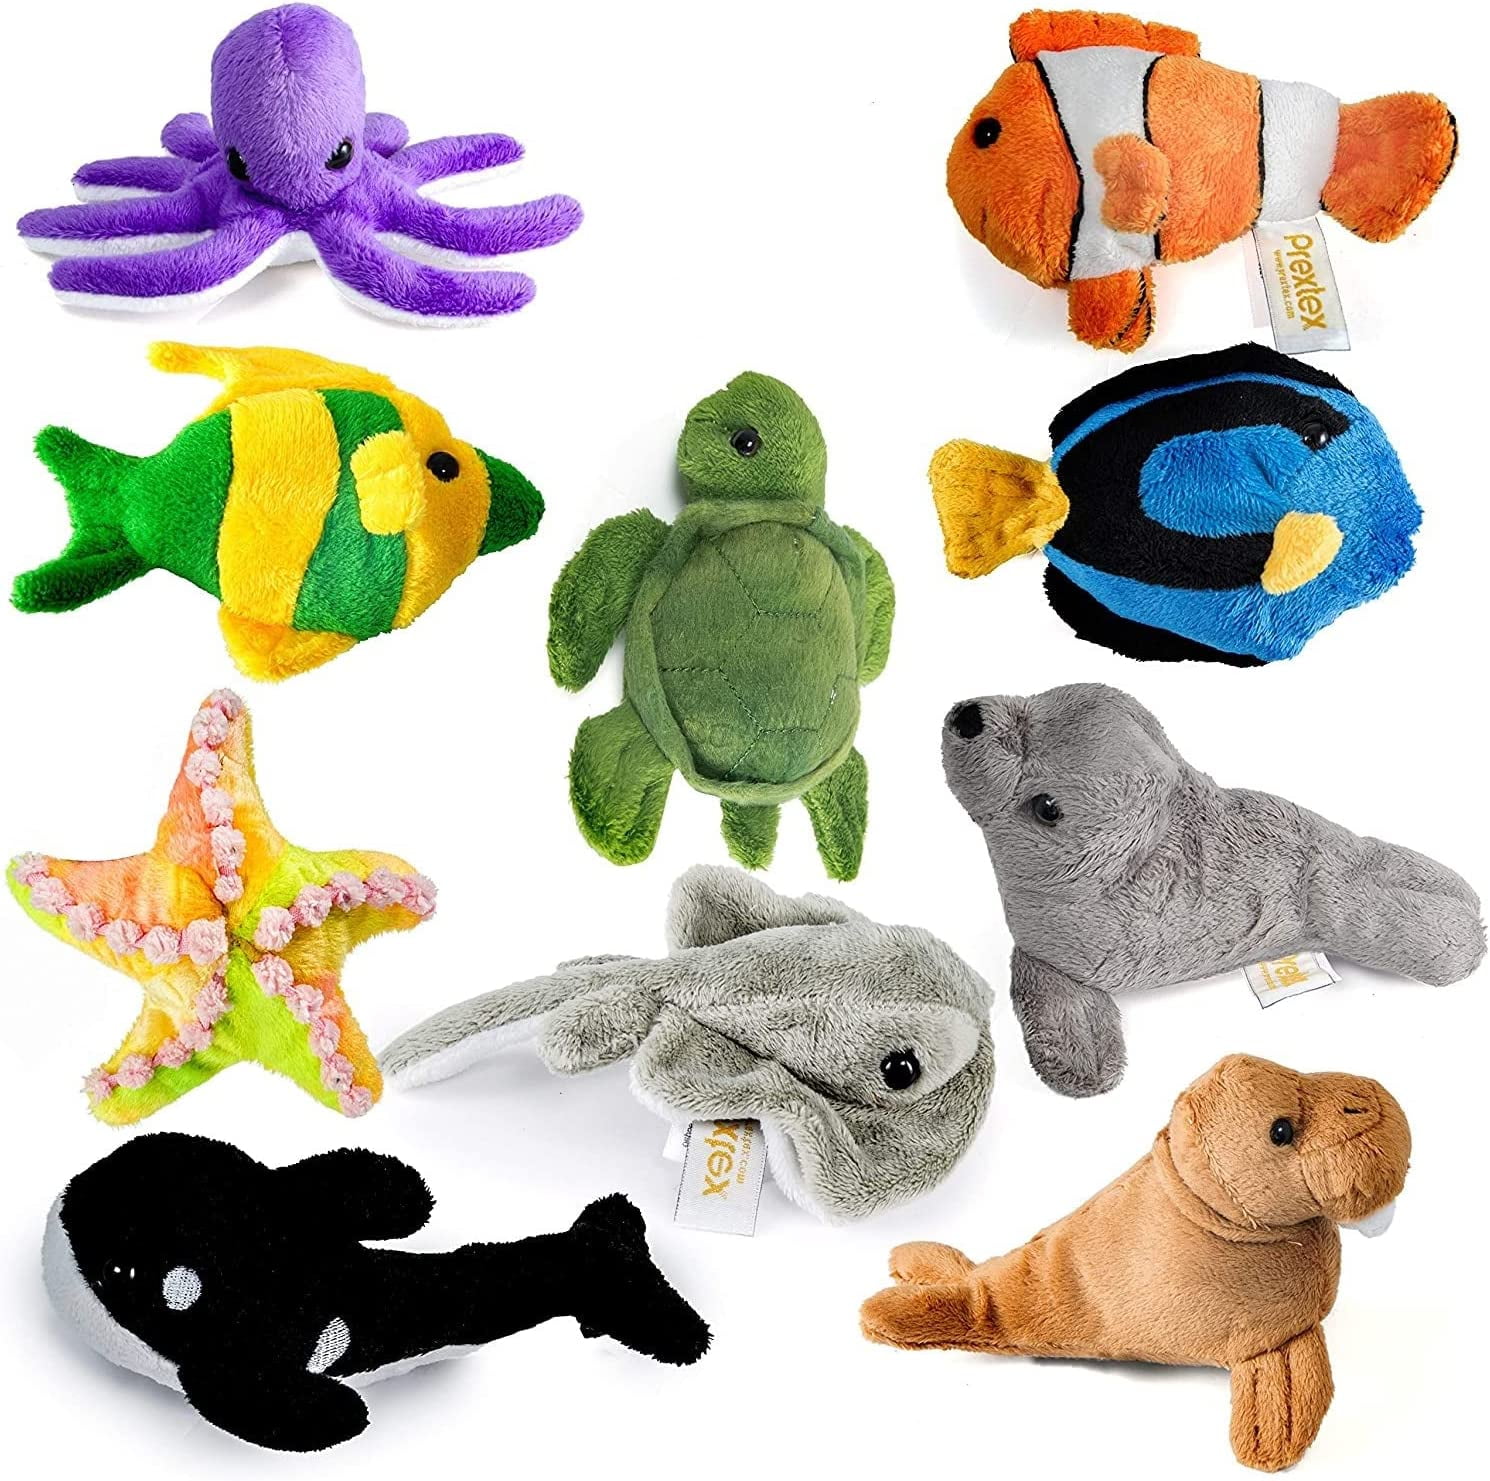 Prextex Plush Soft Stuffed Sea Animals Playset - Plush Sea Life Assortment:  Turtle, Stingray, Nemo Fish, Killer Whale, and More - 10 Piece Set -  